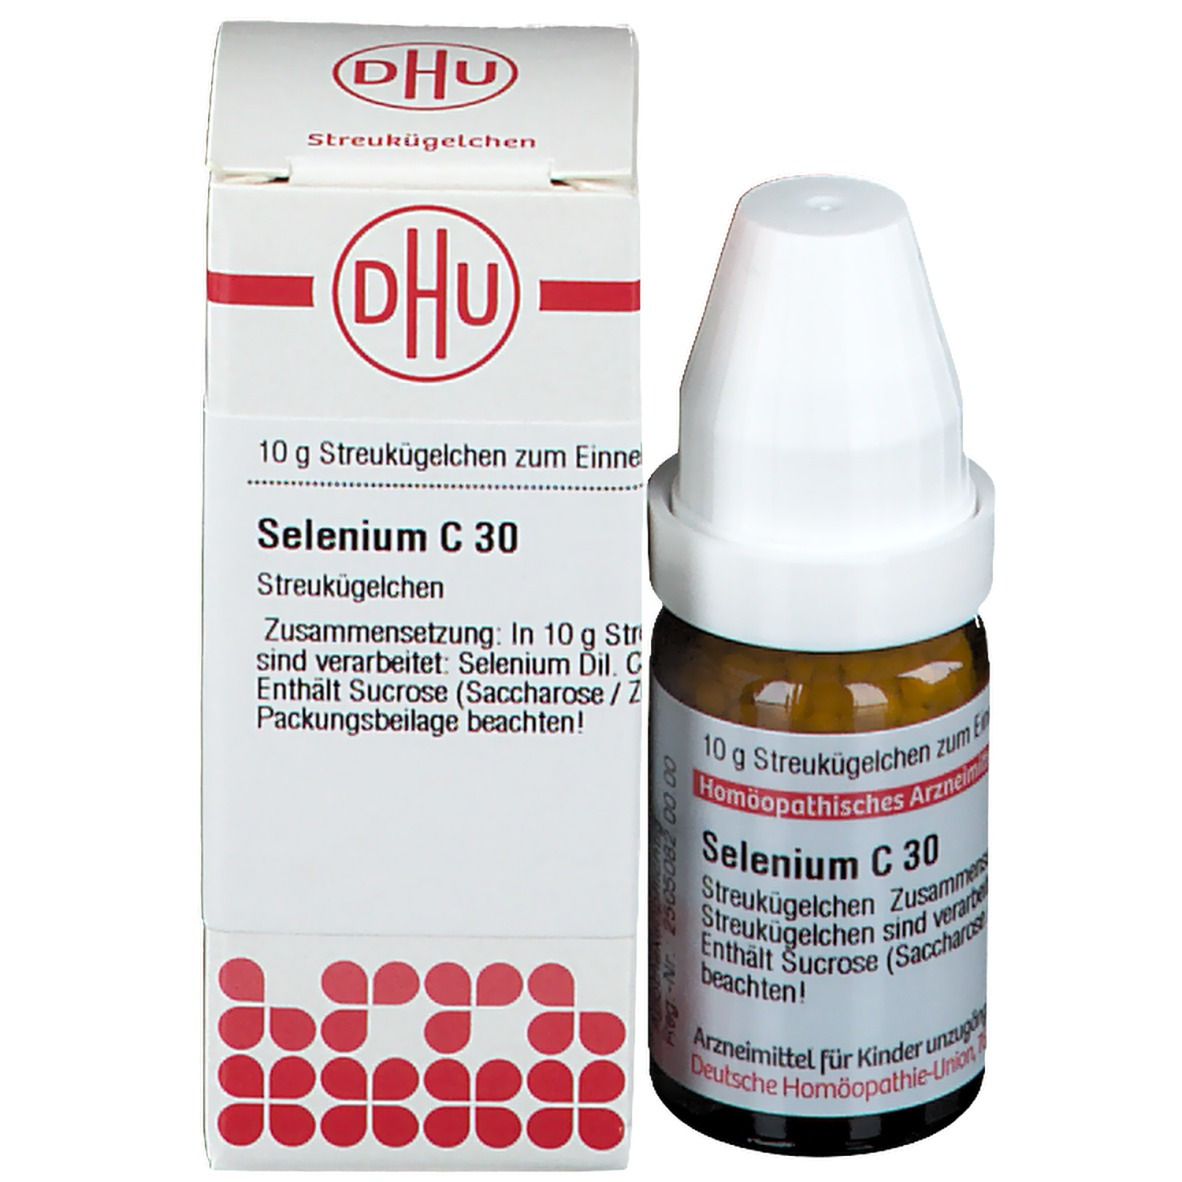 DHU Selenium C30